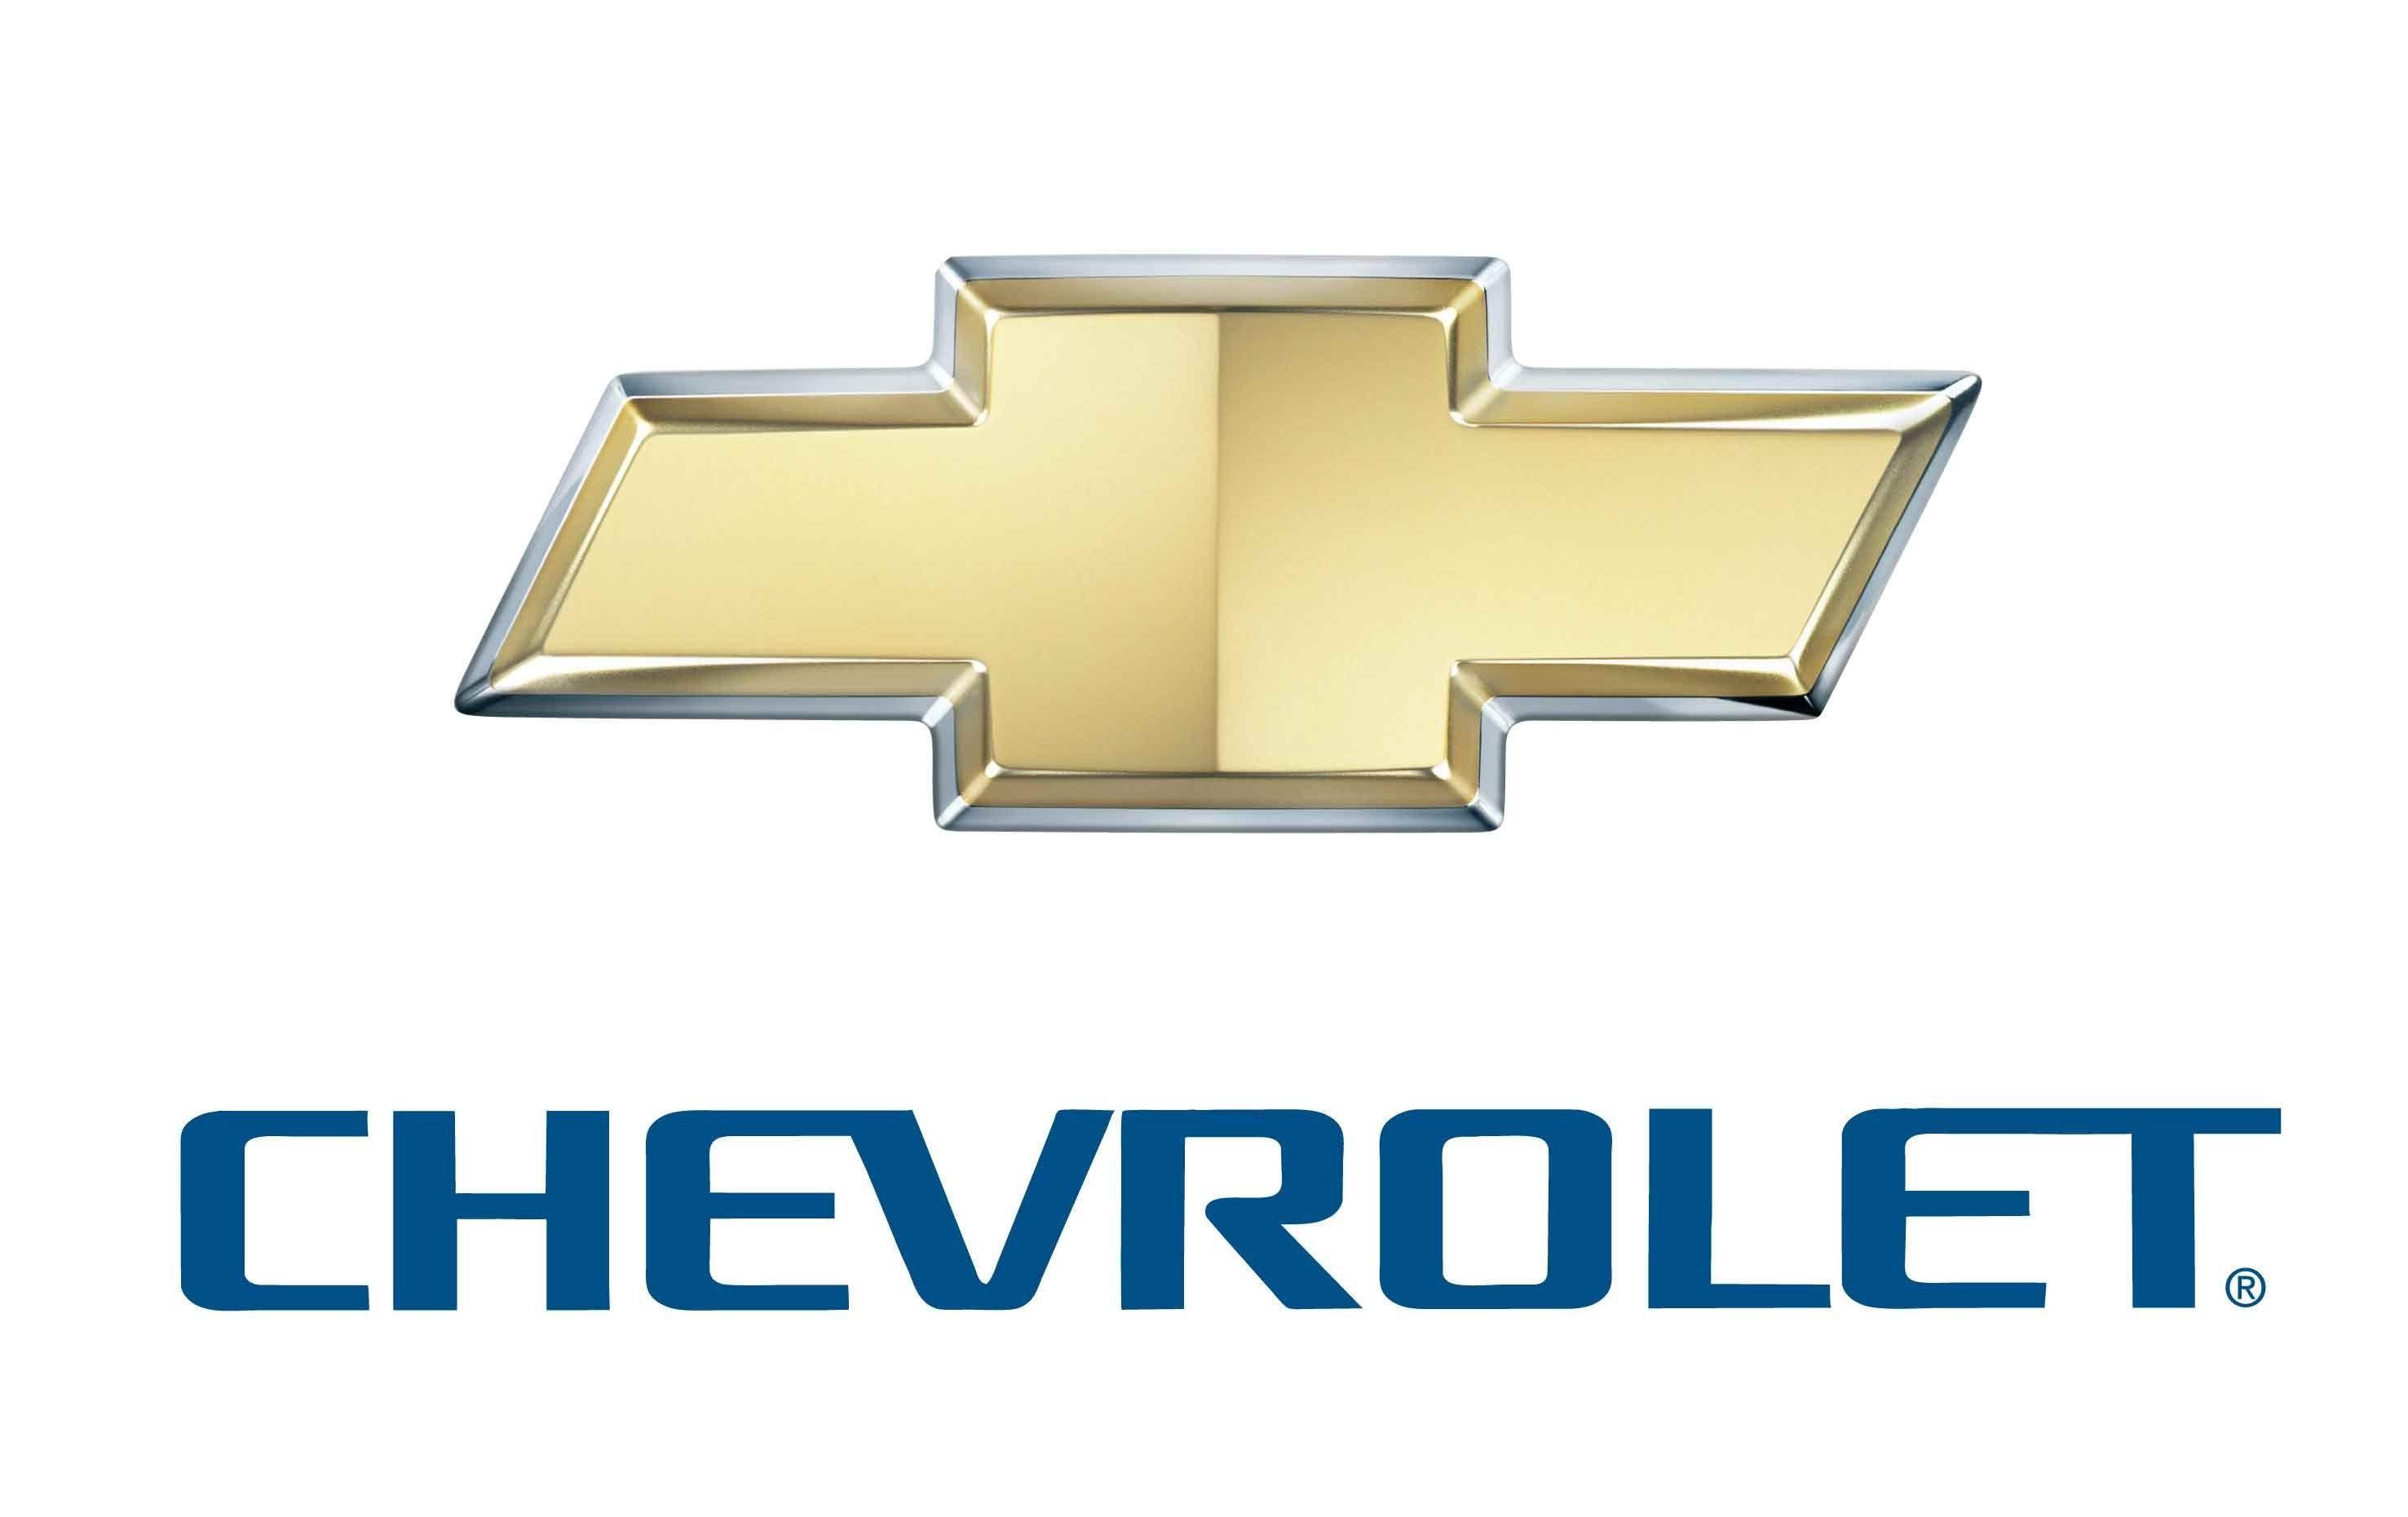 Chevrolet Logo Wallpaper. Chevy Logo Chevrolet Wallpaper